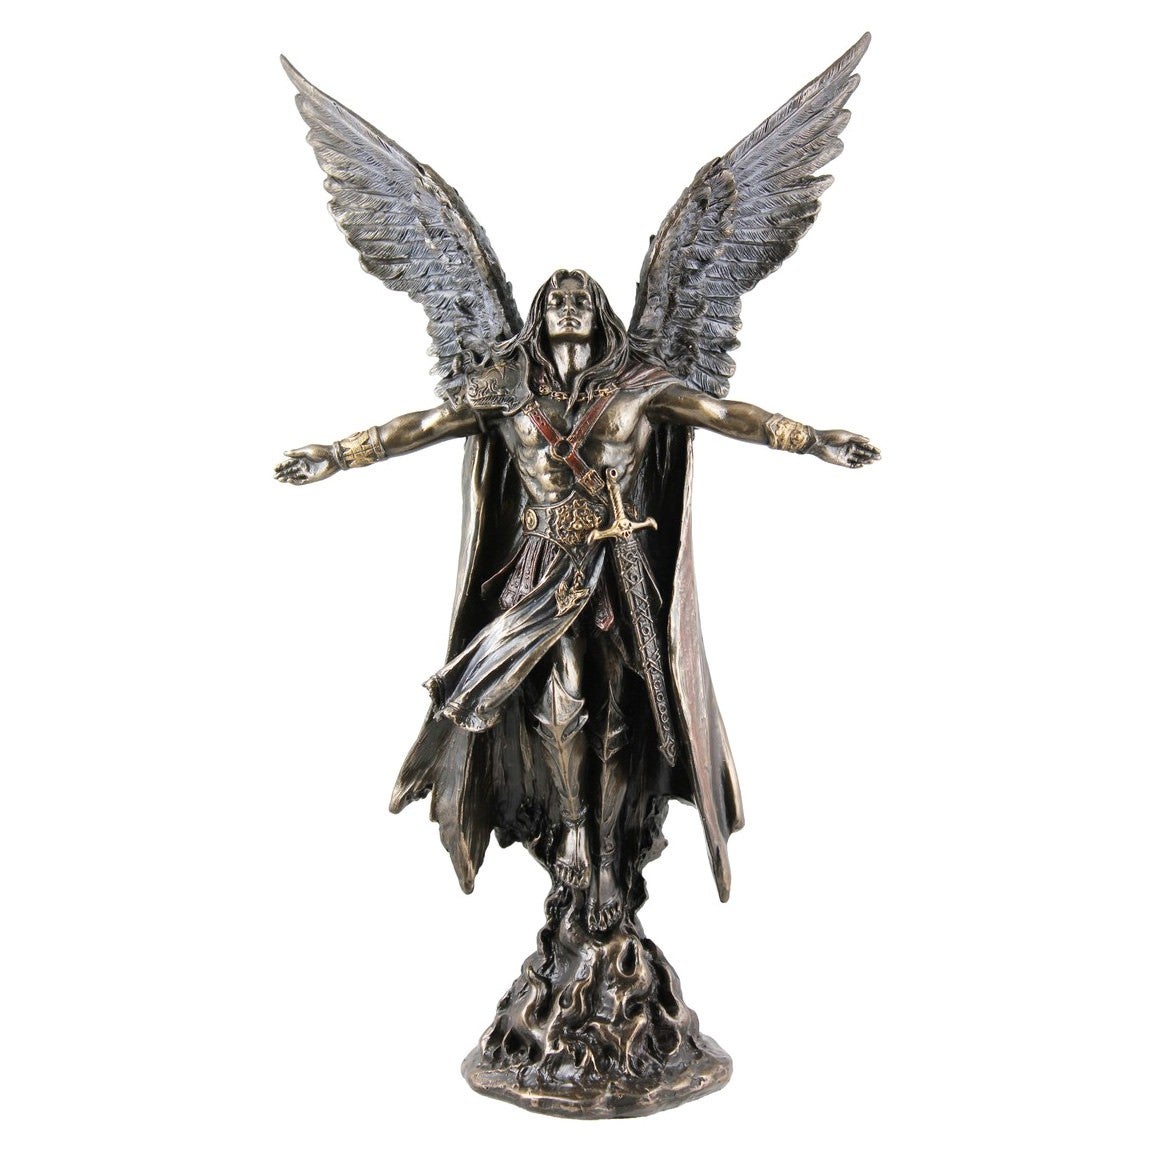 Veronese Cold Cast Bronze Coated Angel Figurine, Uriel The Archangel of Wisdom, Small